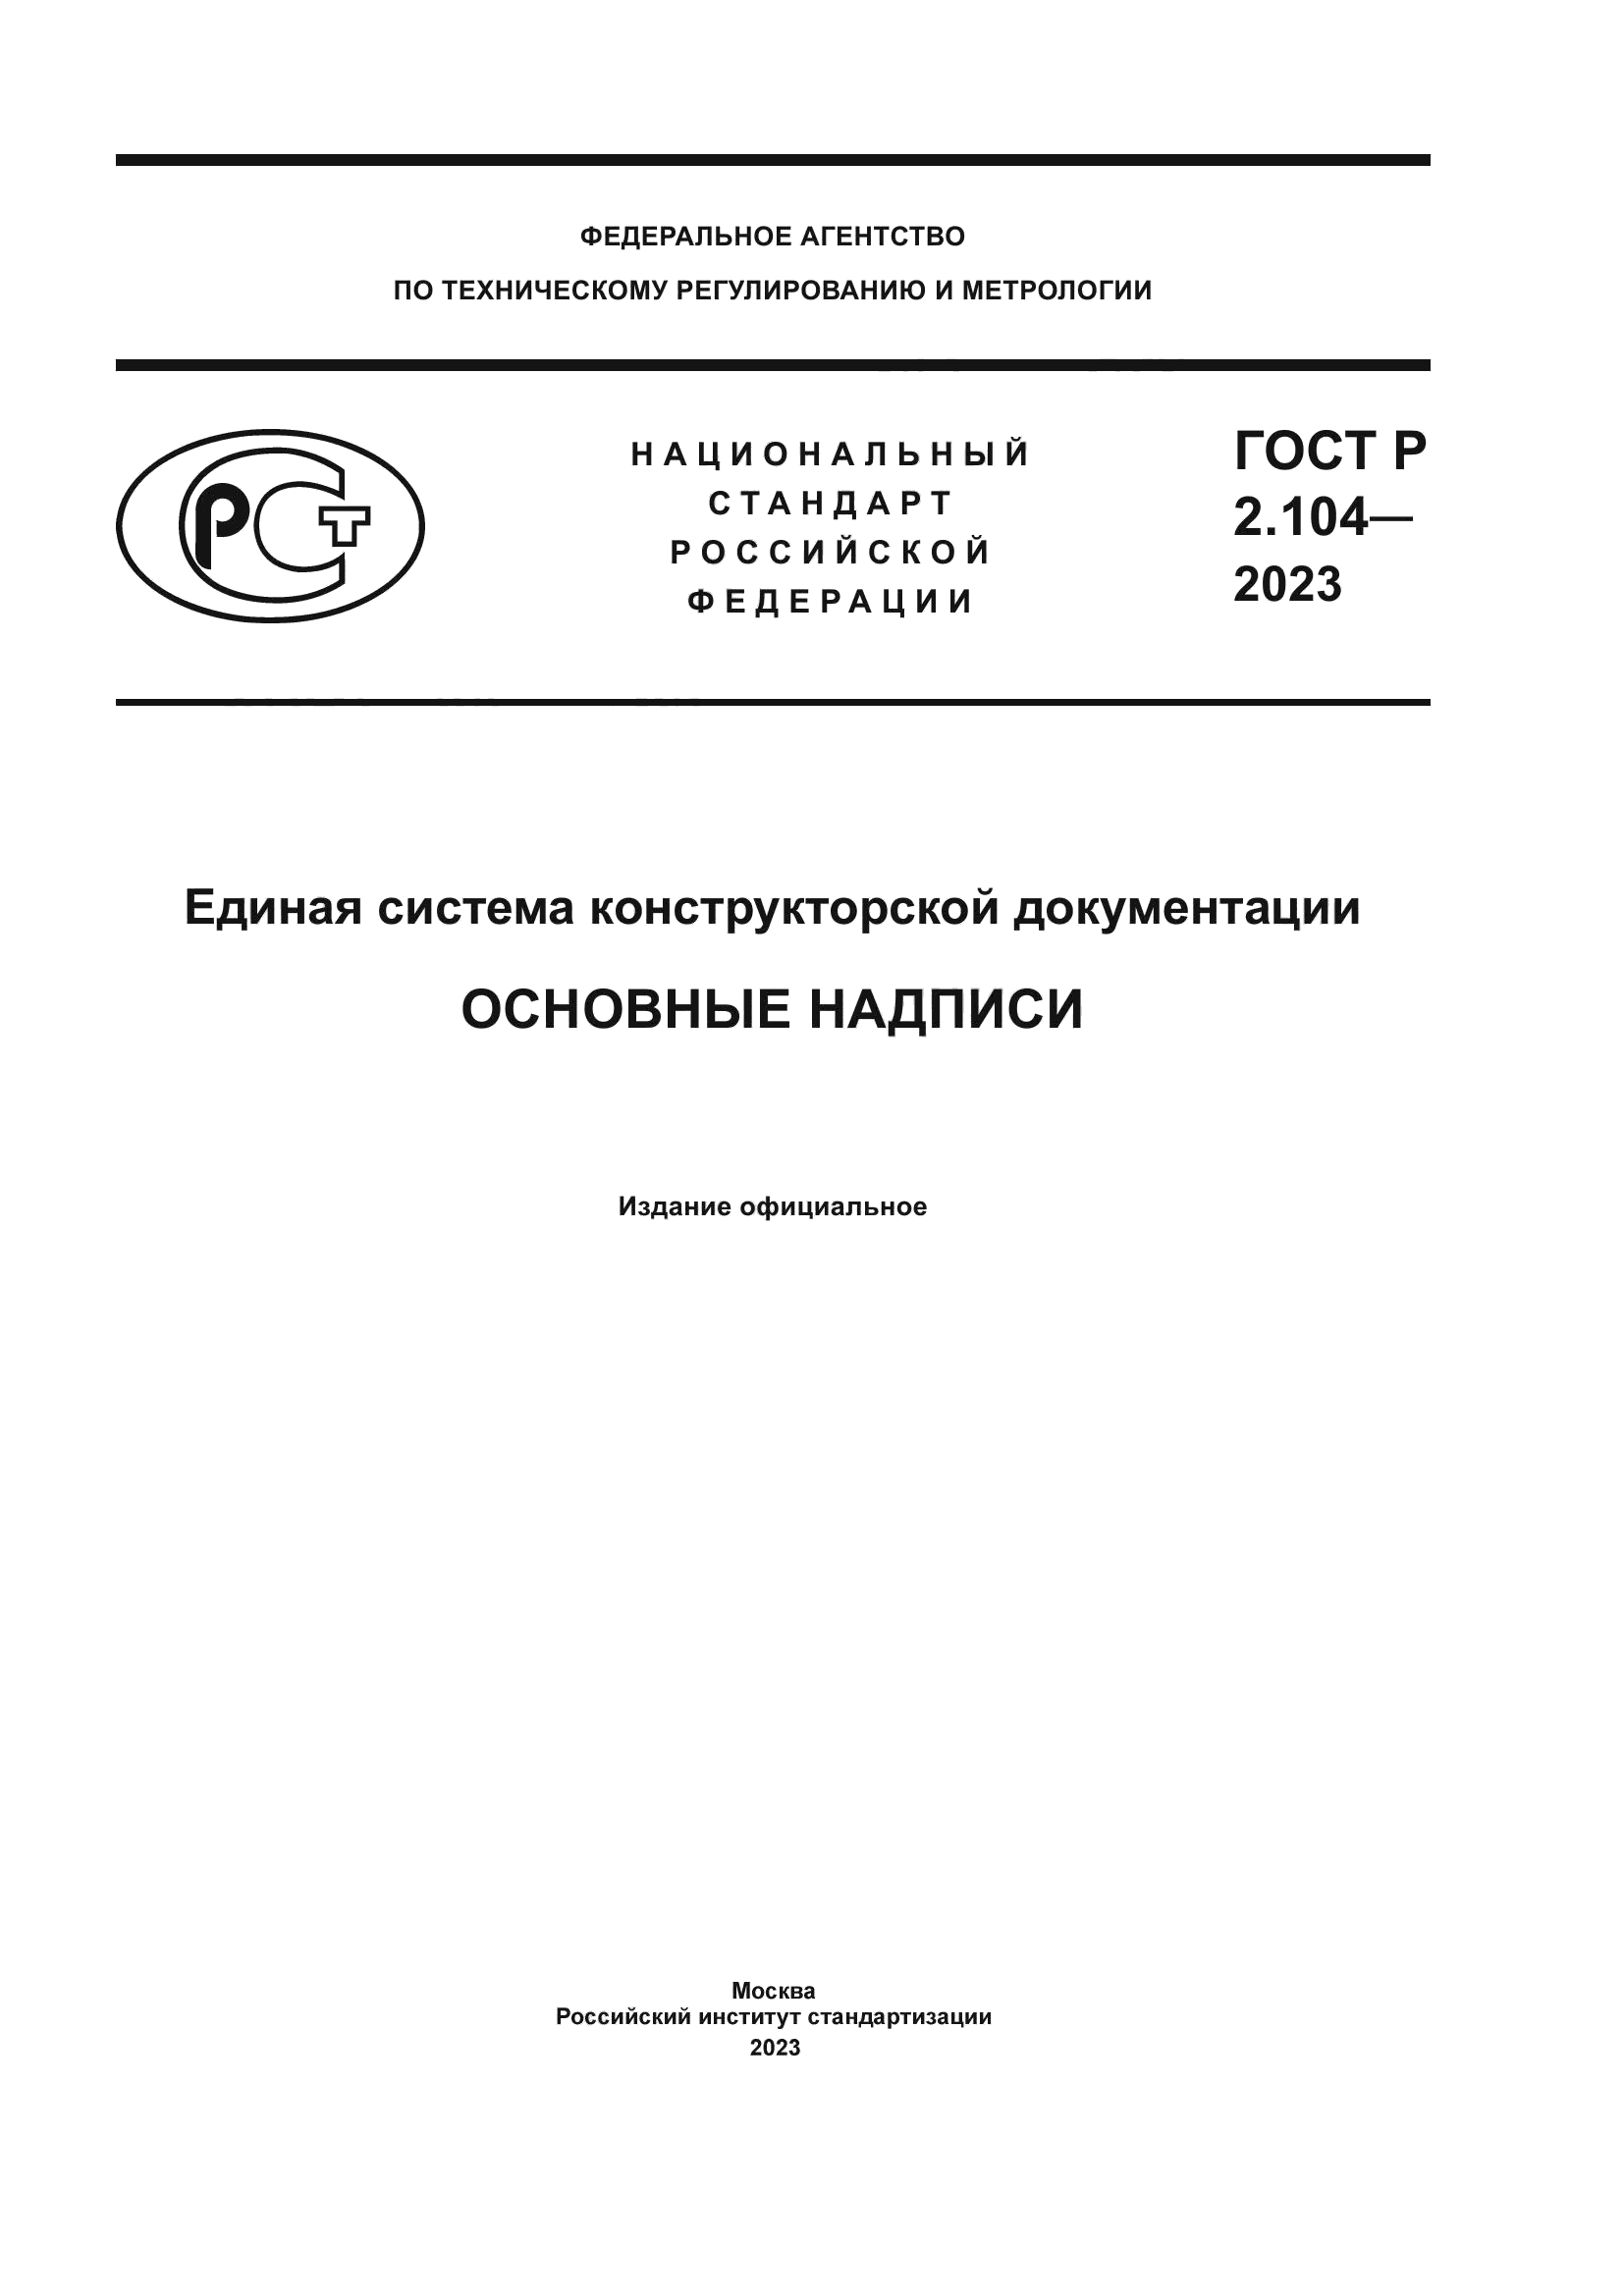 ГОСТ Р 2.104-2023